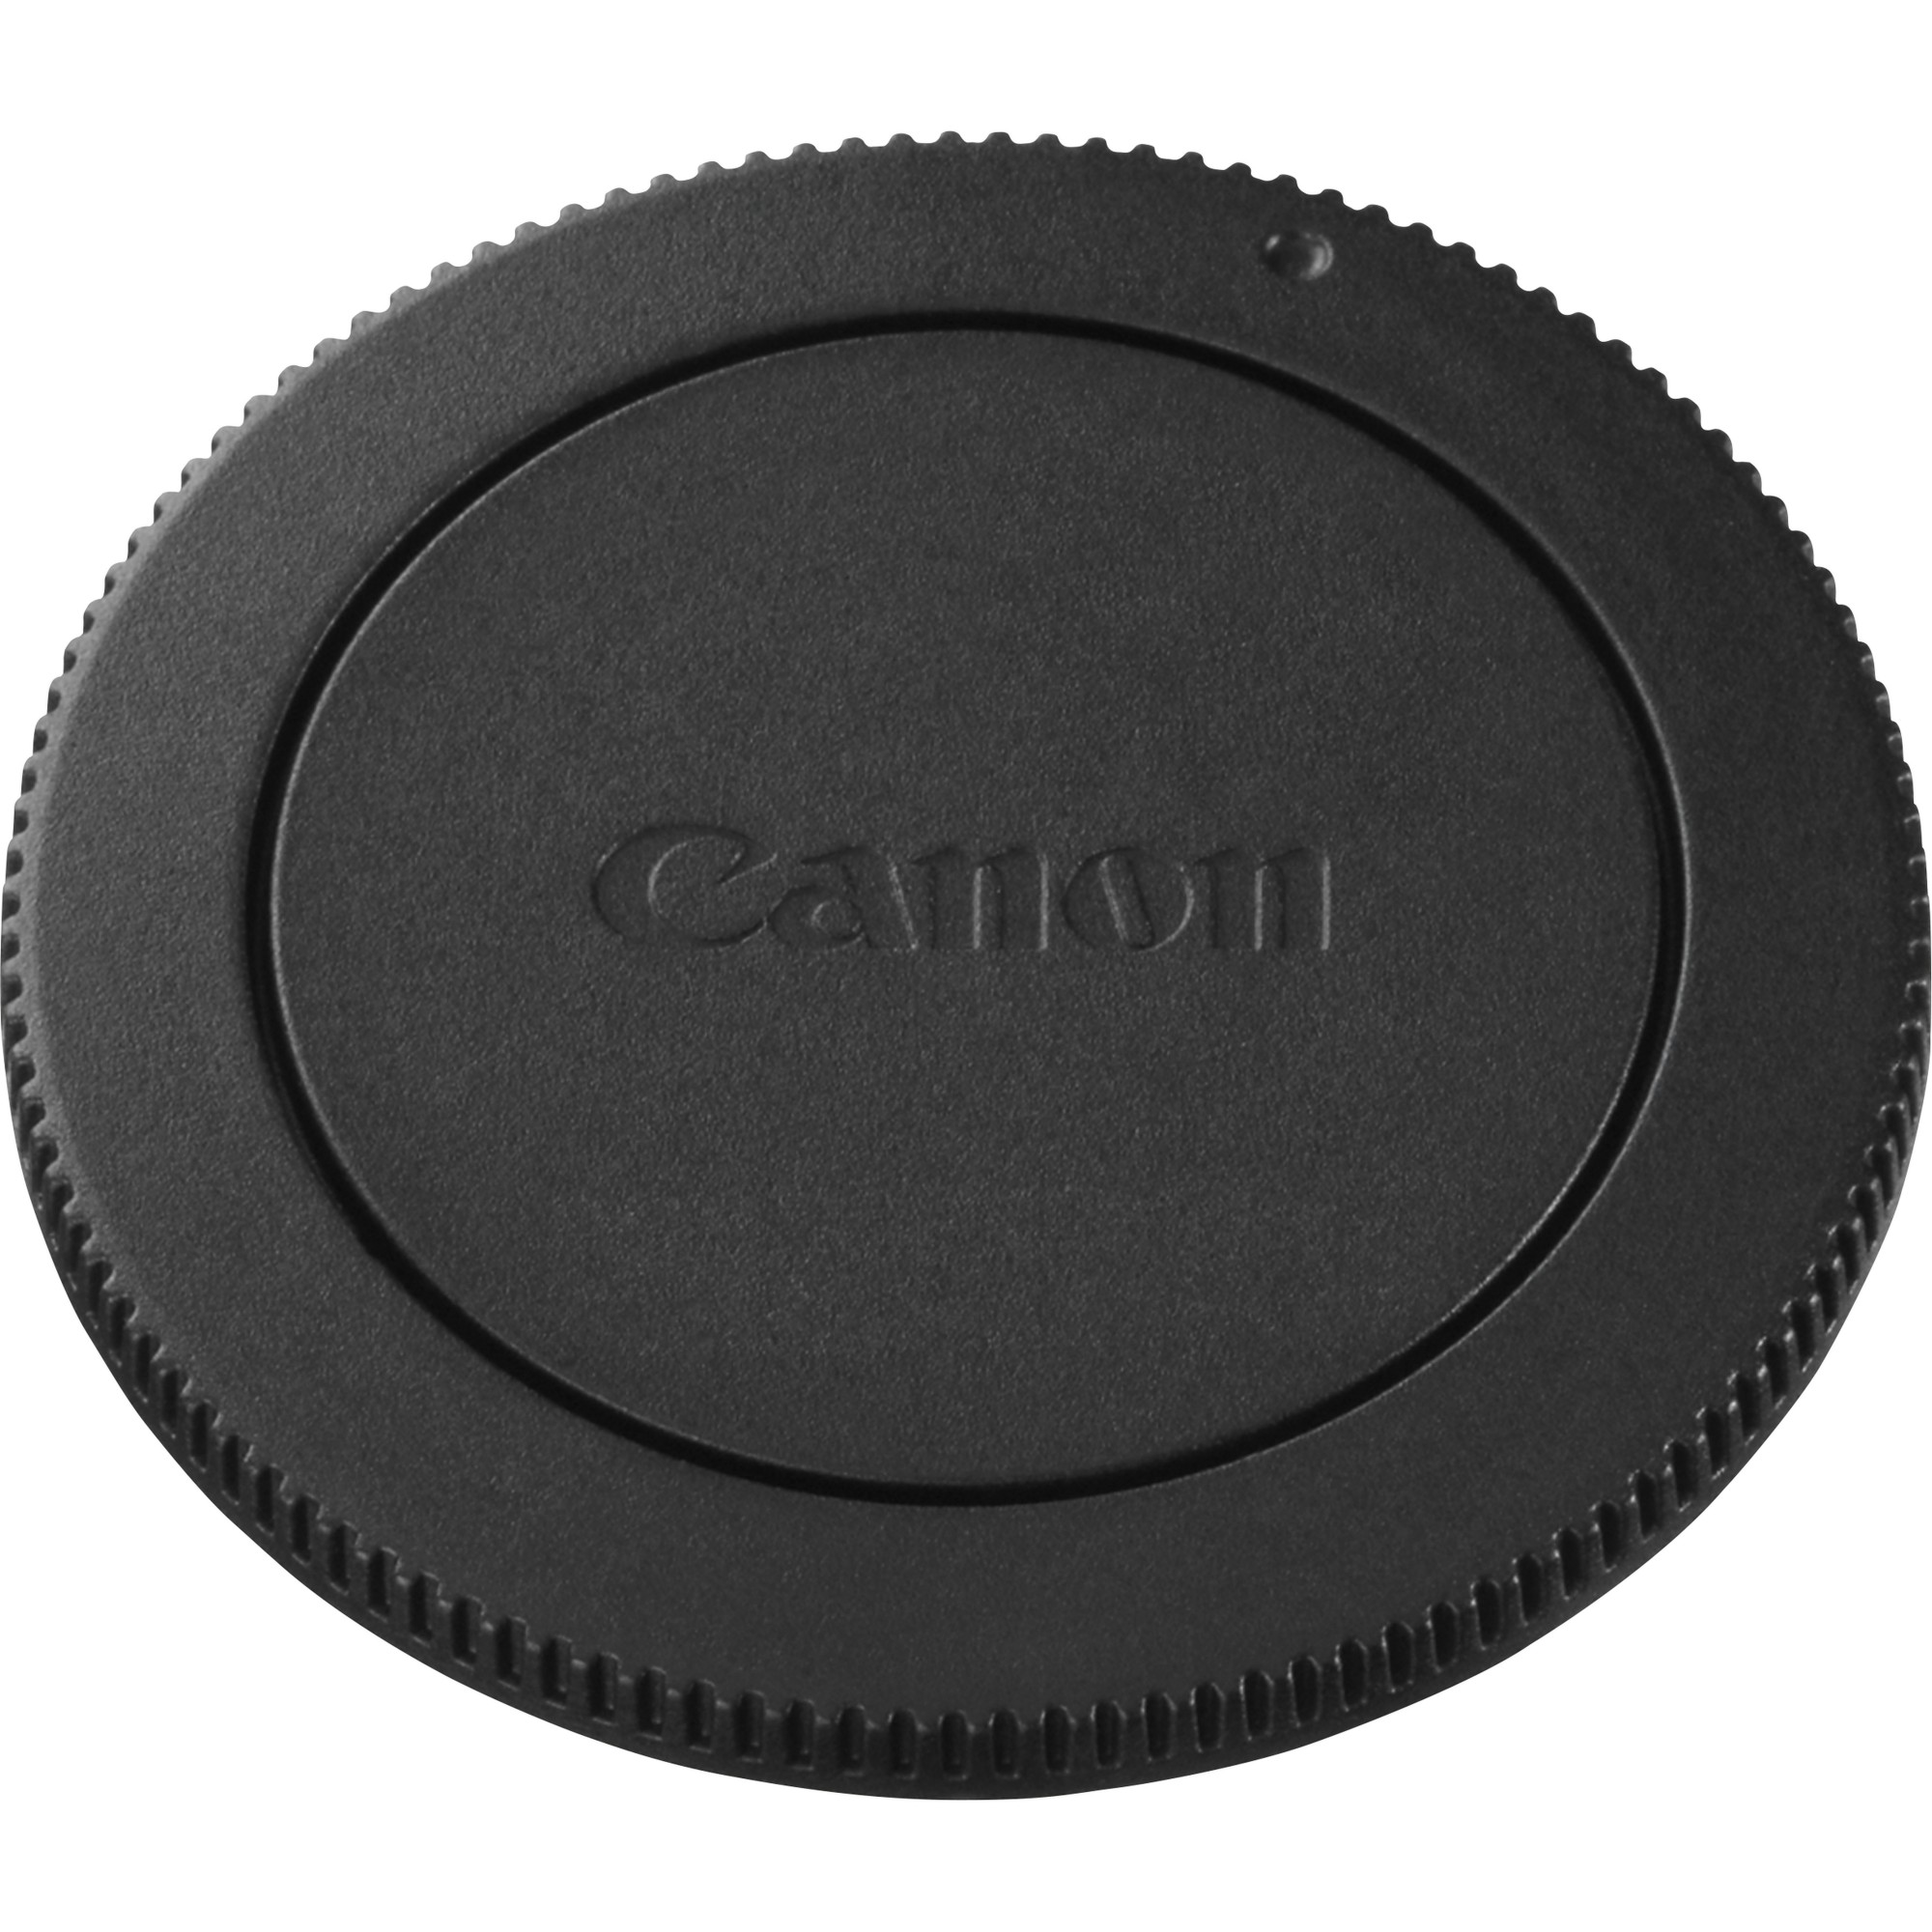 Photos - Other photo accessories Canon R-F-4 Camera Body Cover Cap 6786B001 